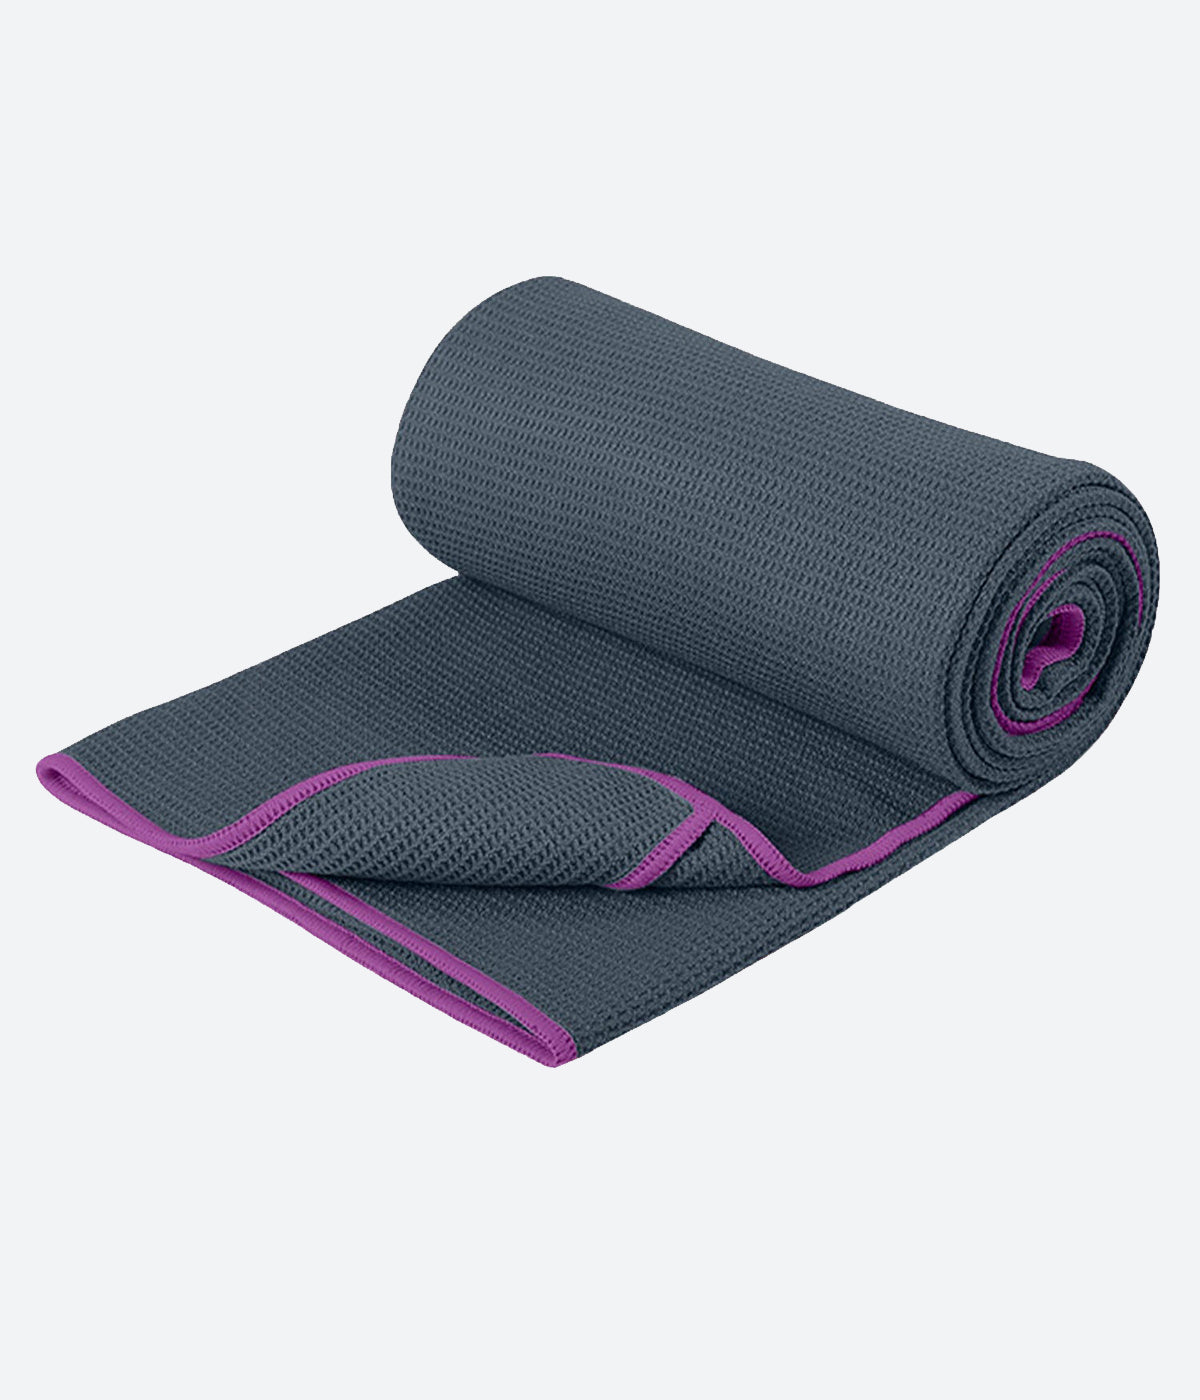 Vive Non Slip Yoga Towel & Hand Towel - Microfiber, Quick Drying, Washable,  Lightweight - Non Slip Grip